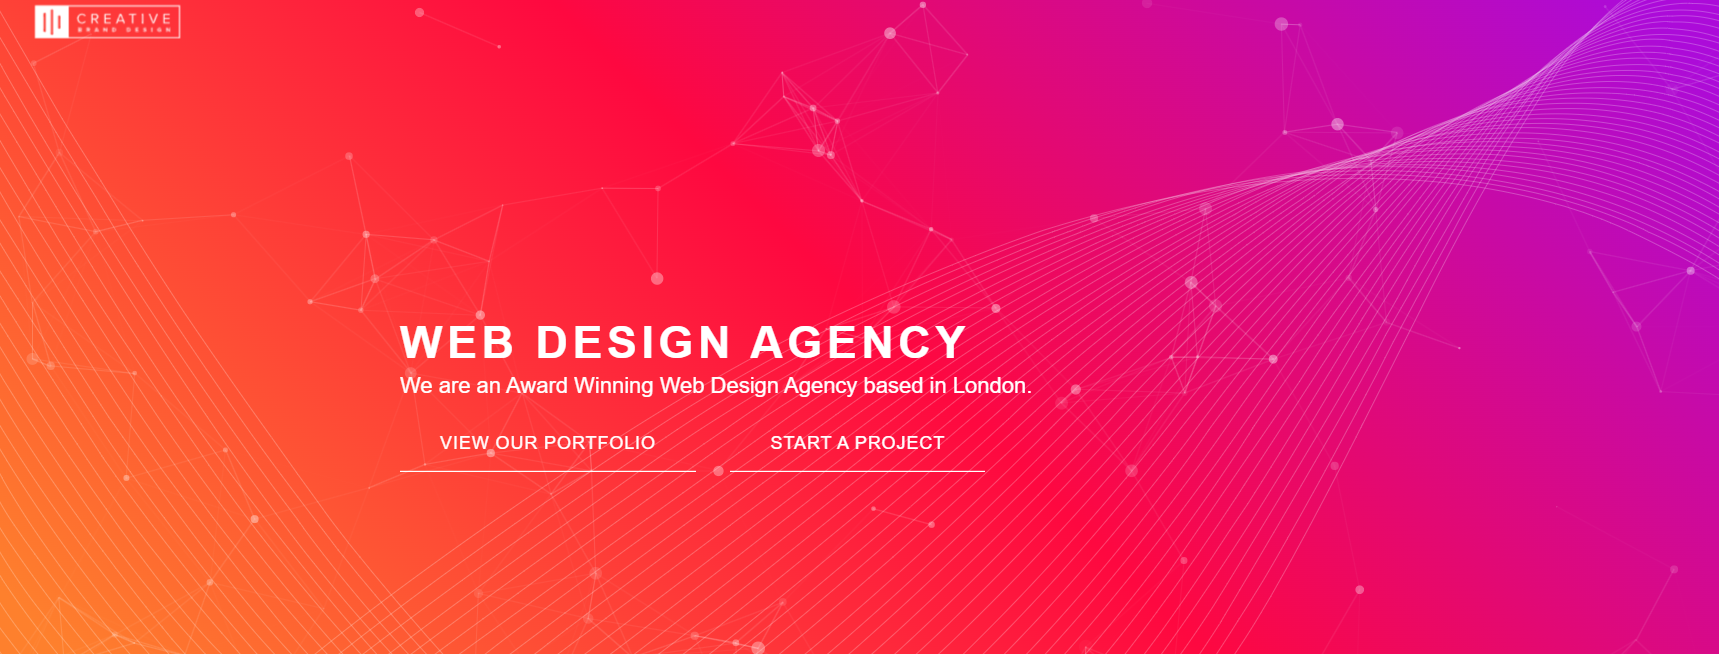 magento development company in uk: Creative Brand Design